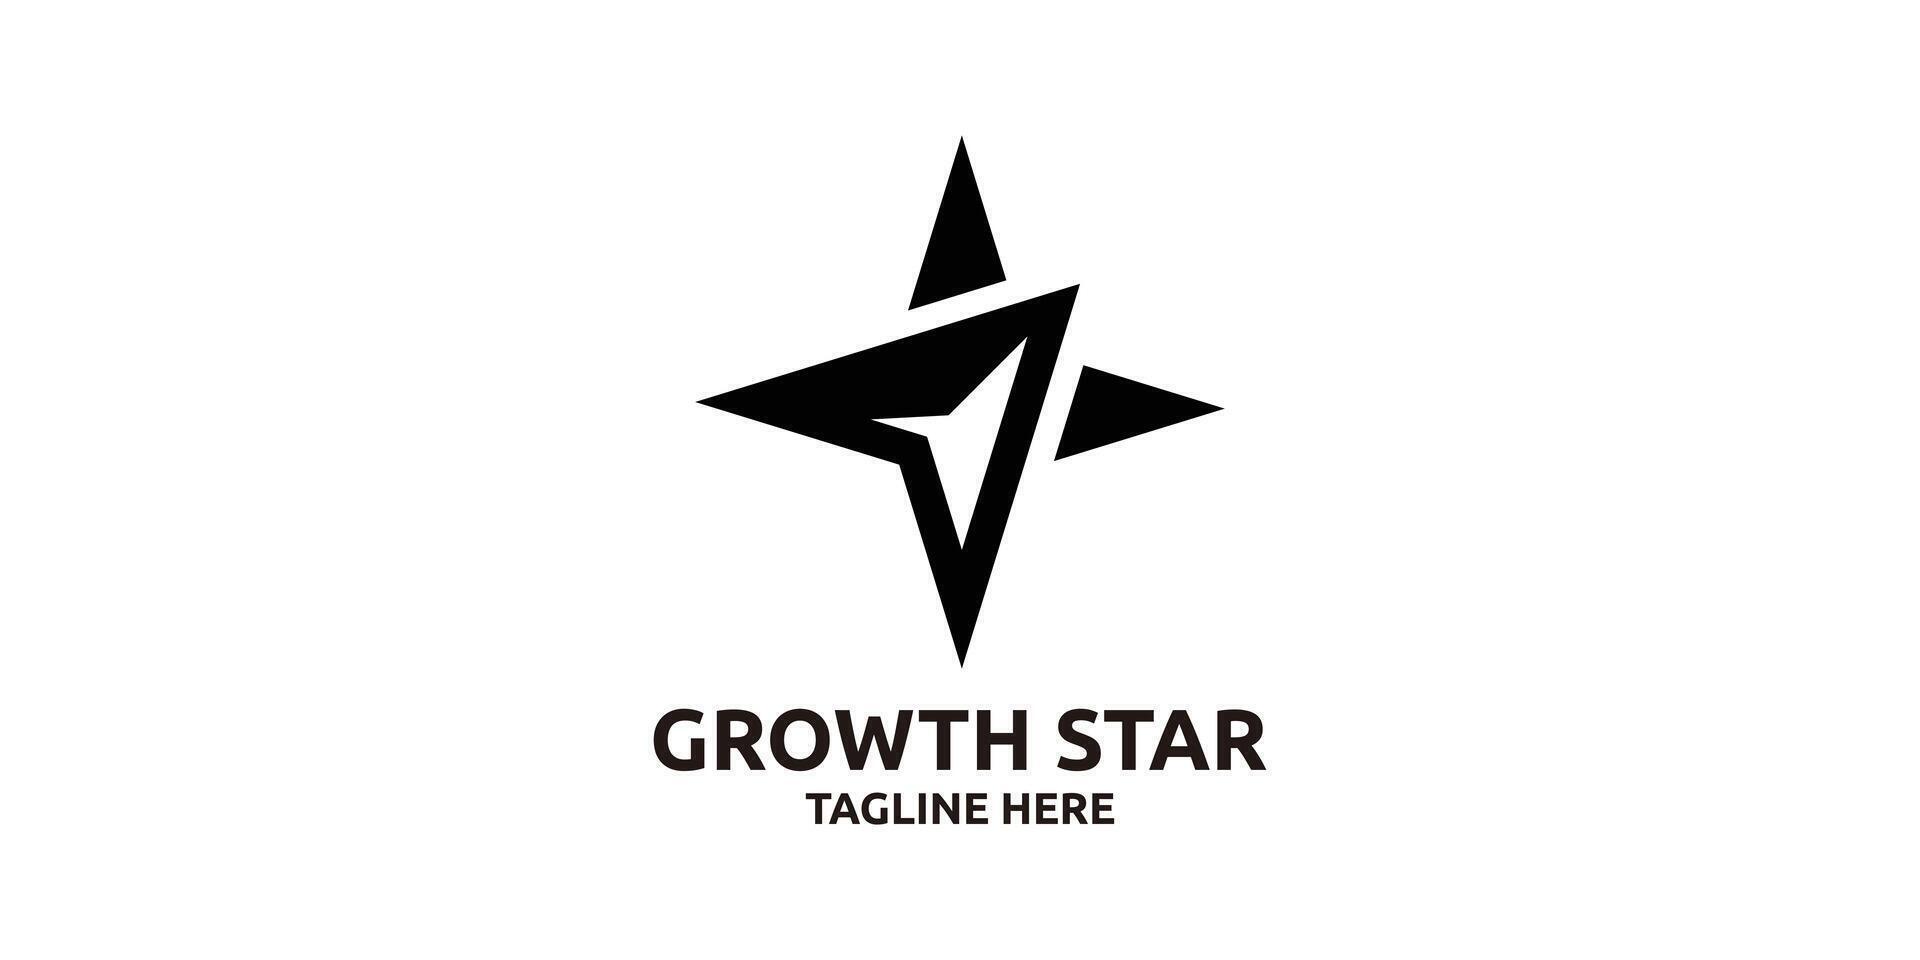 creative logo design growth star, north star, grow, business, arrow, logo design template, icon, symbol, creative idea vector